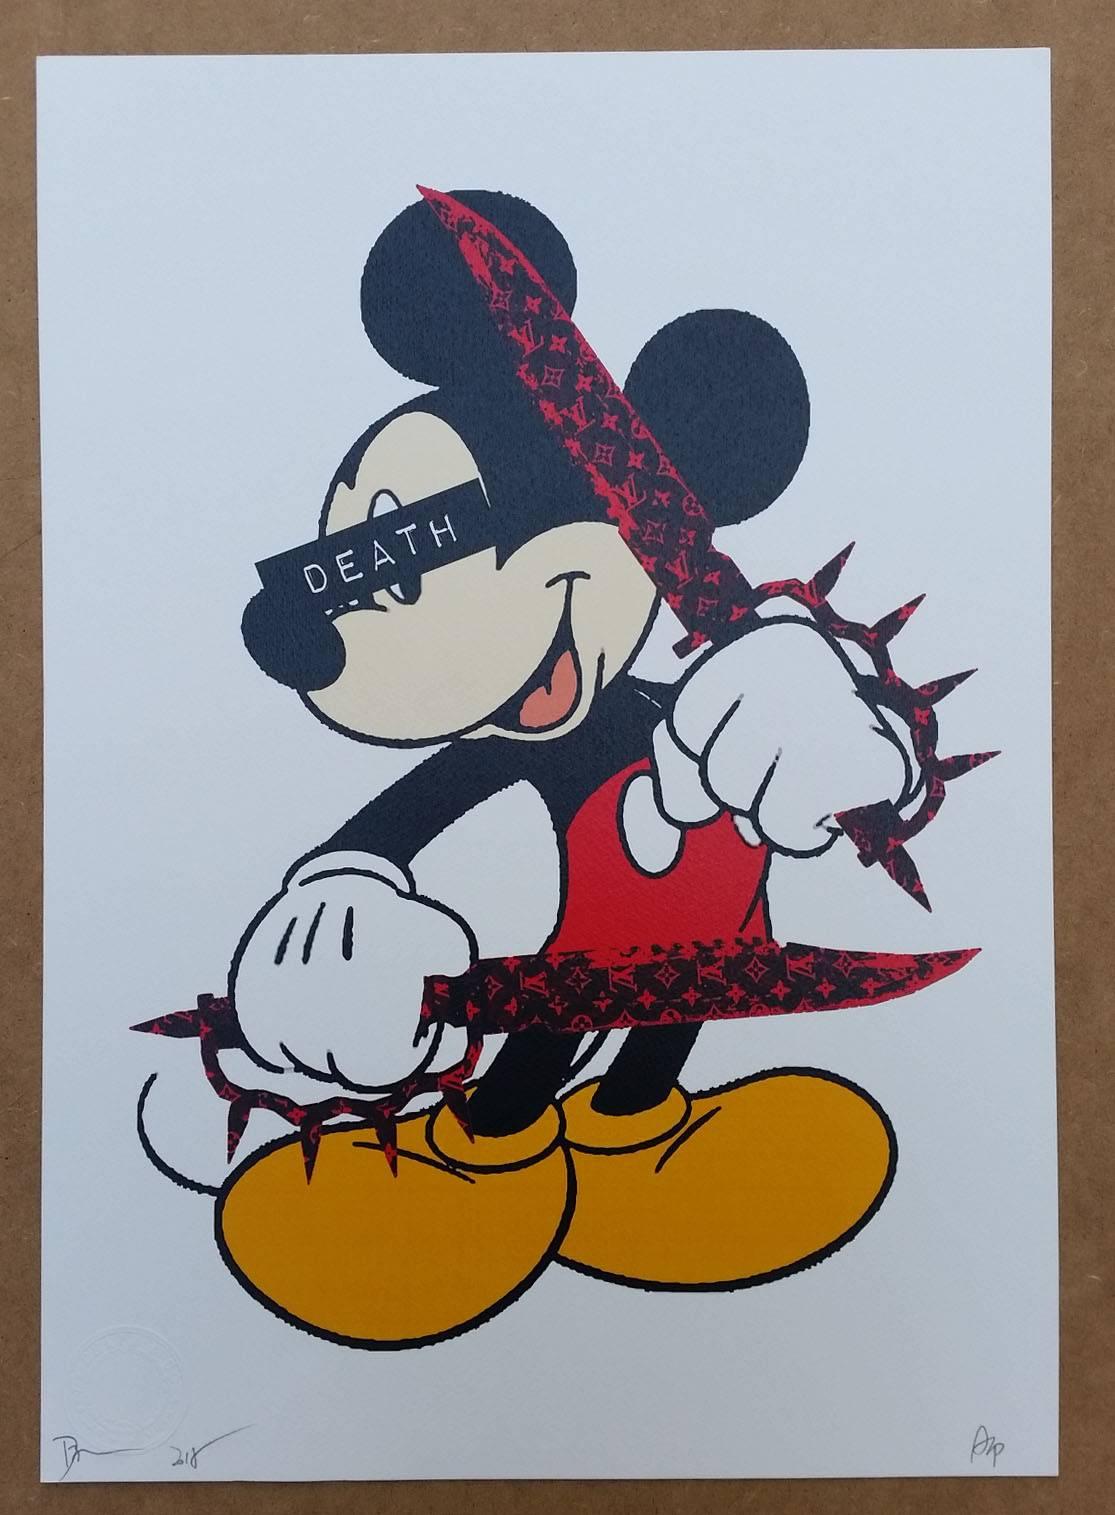 KungFu Mickey Death - Print by Death NYC